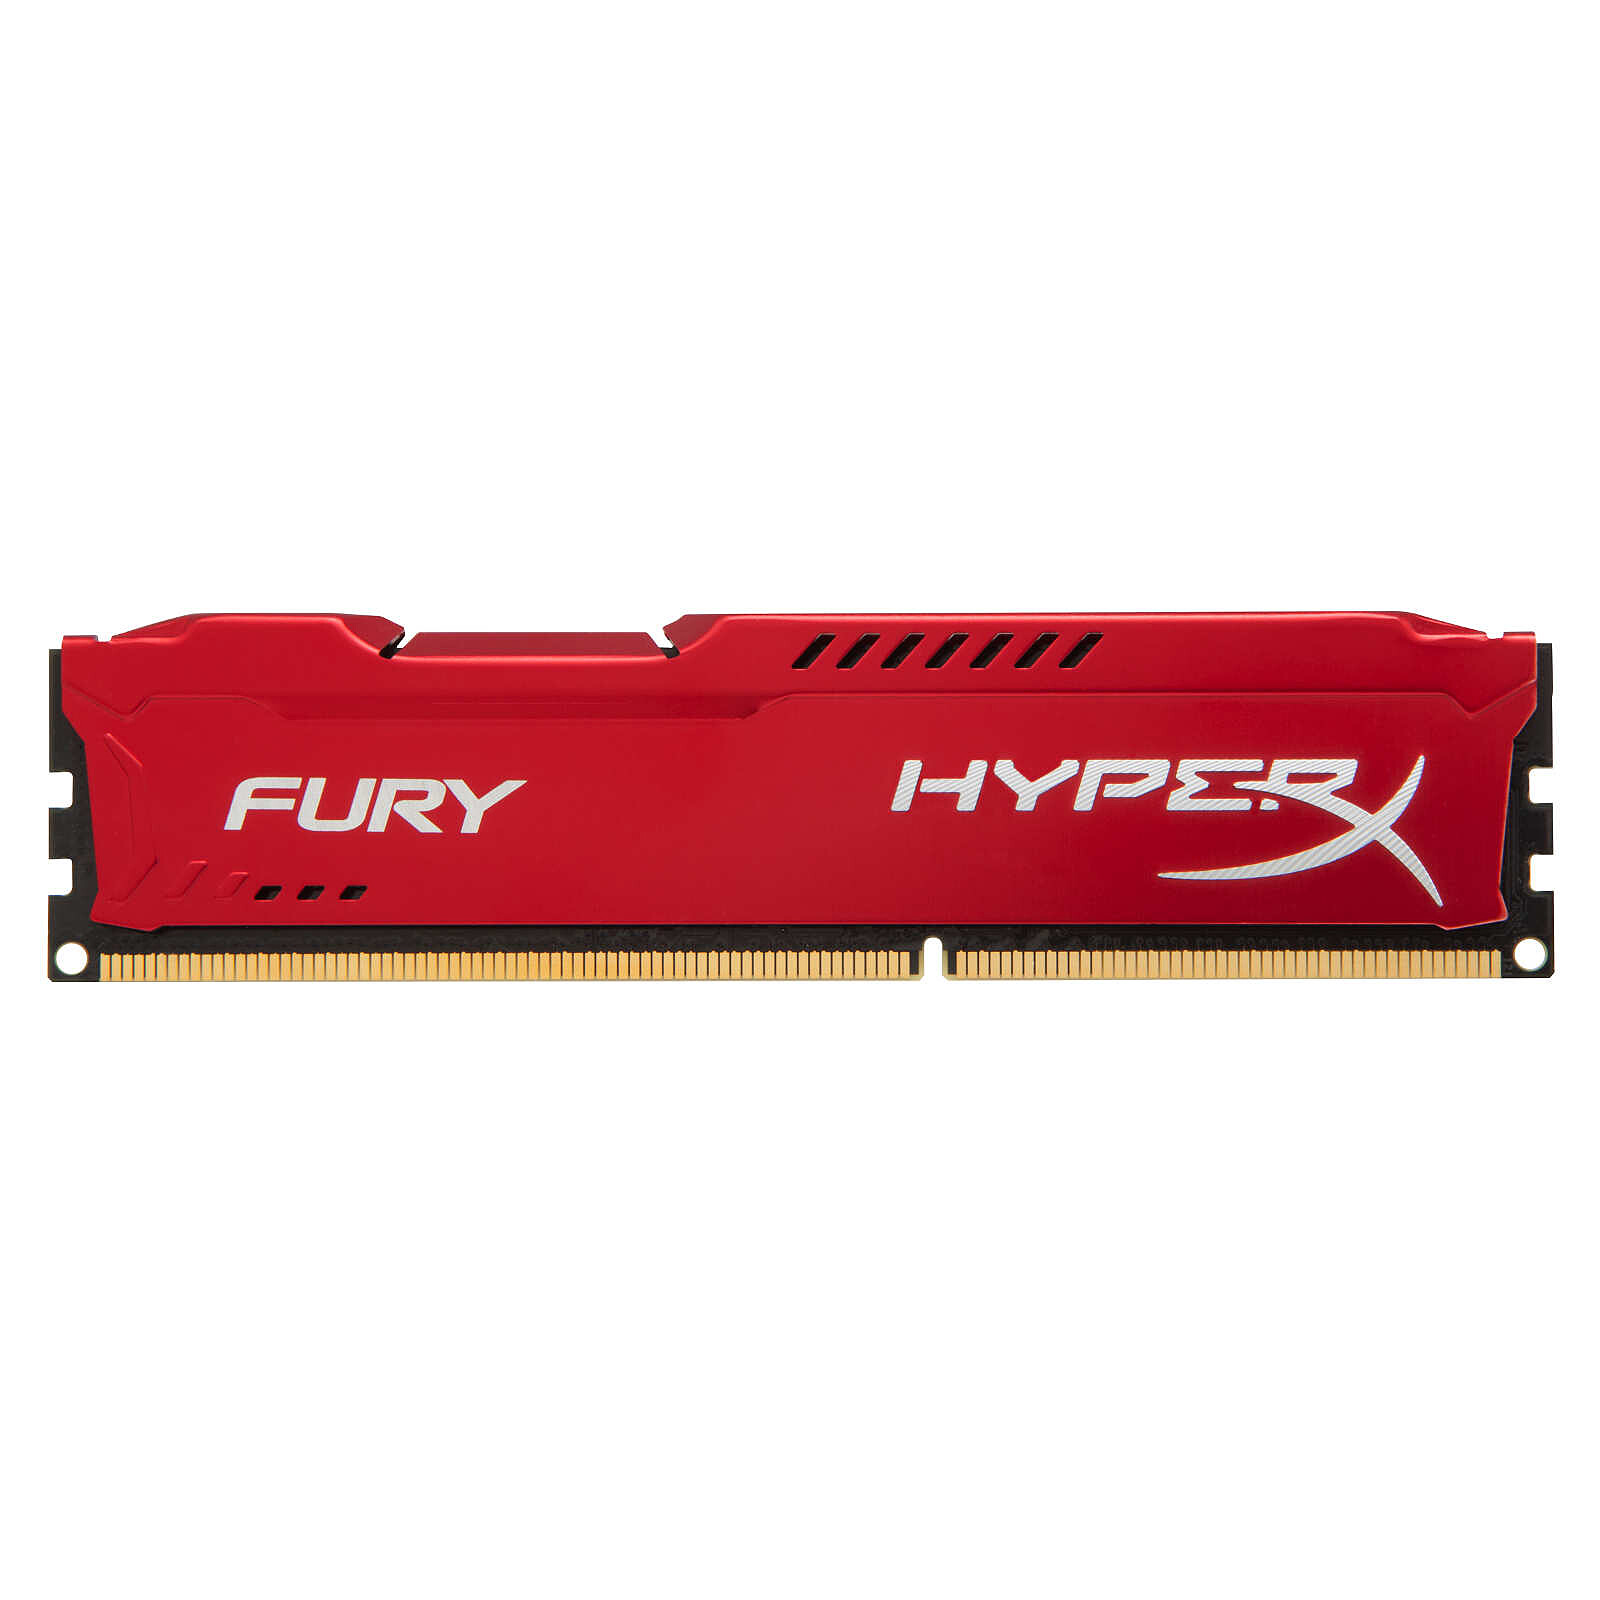 HyperX Fury DDR3 1866 MHz CL10 - Memoria PC HyperX LDLC | ¡Musericordia!